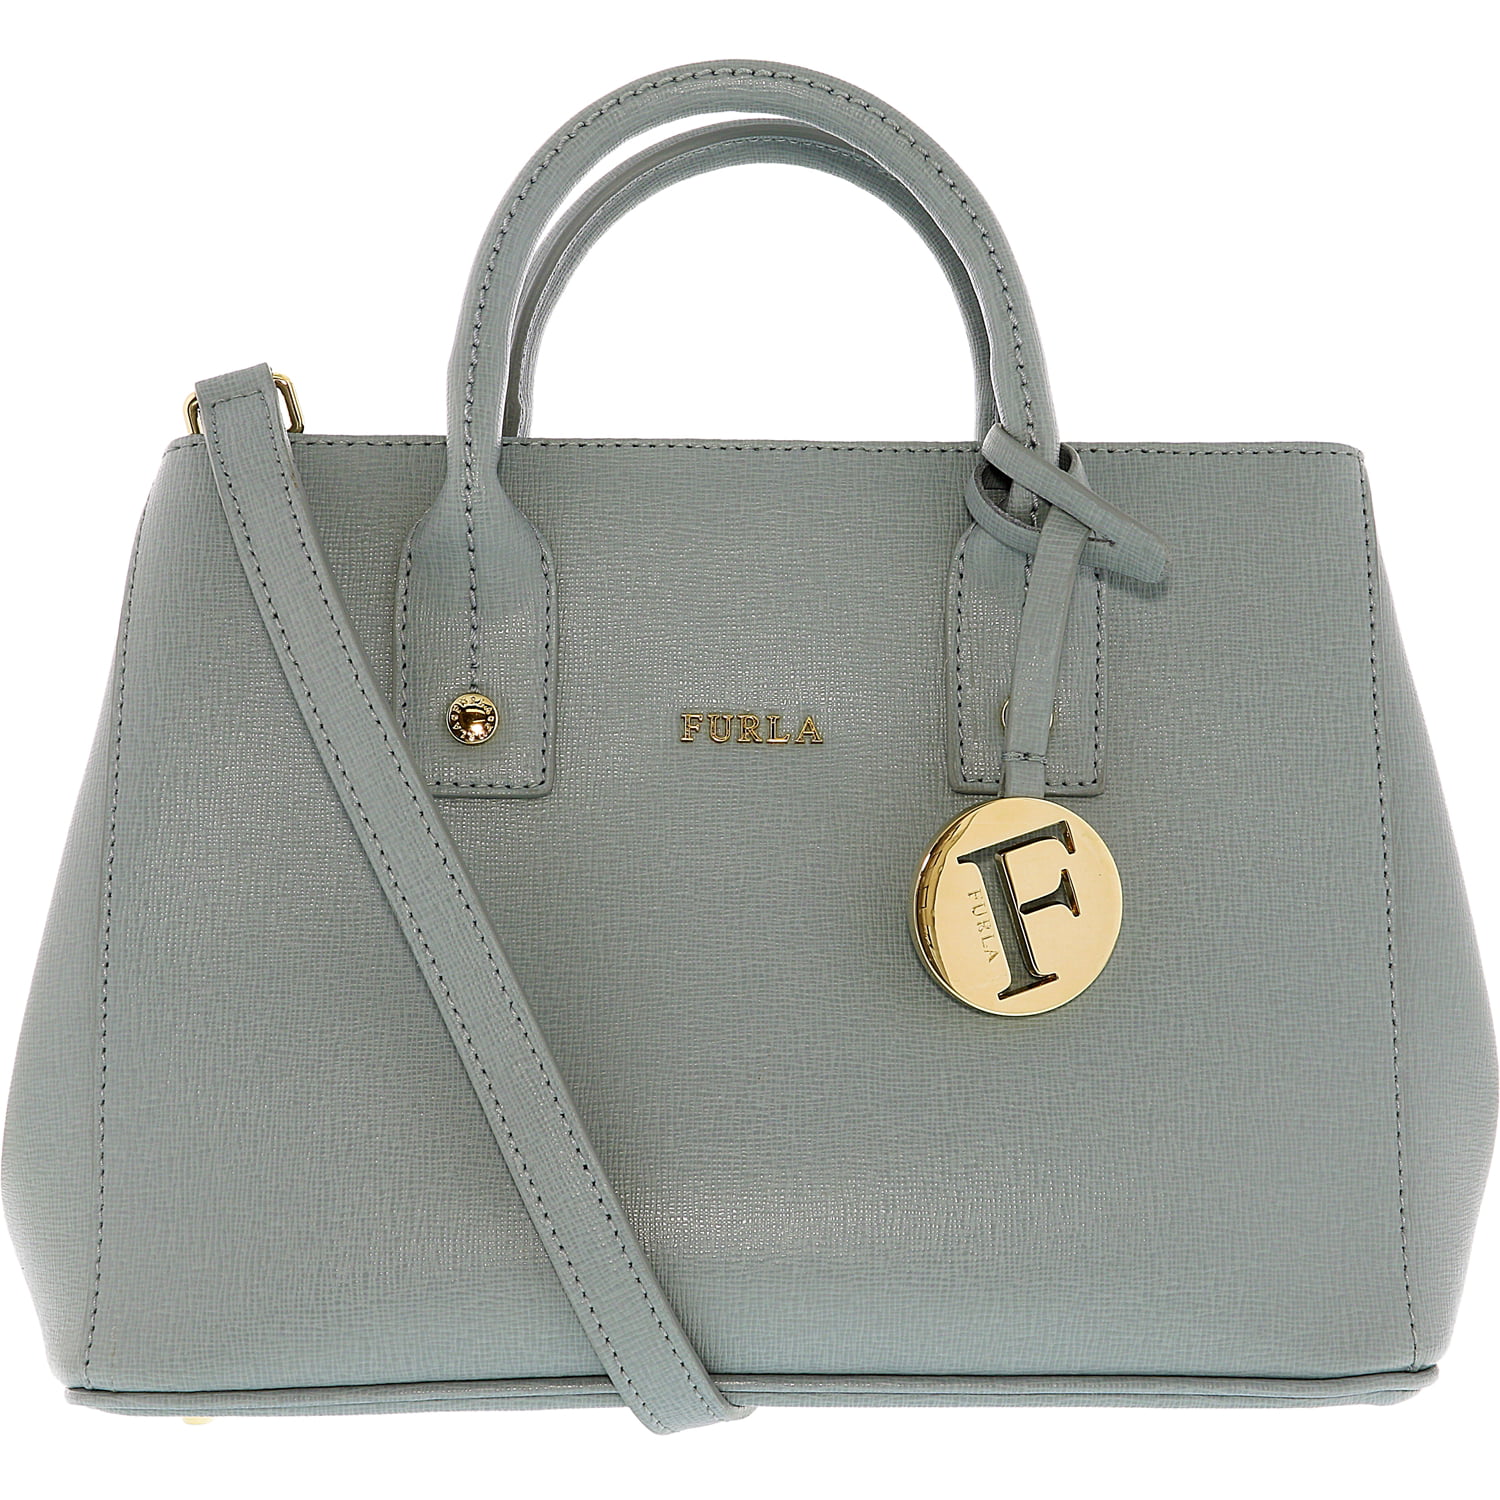 Furla - Furla Women's Linda Mini Tote Leather Top-Handle Bag - Azzurro ...